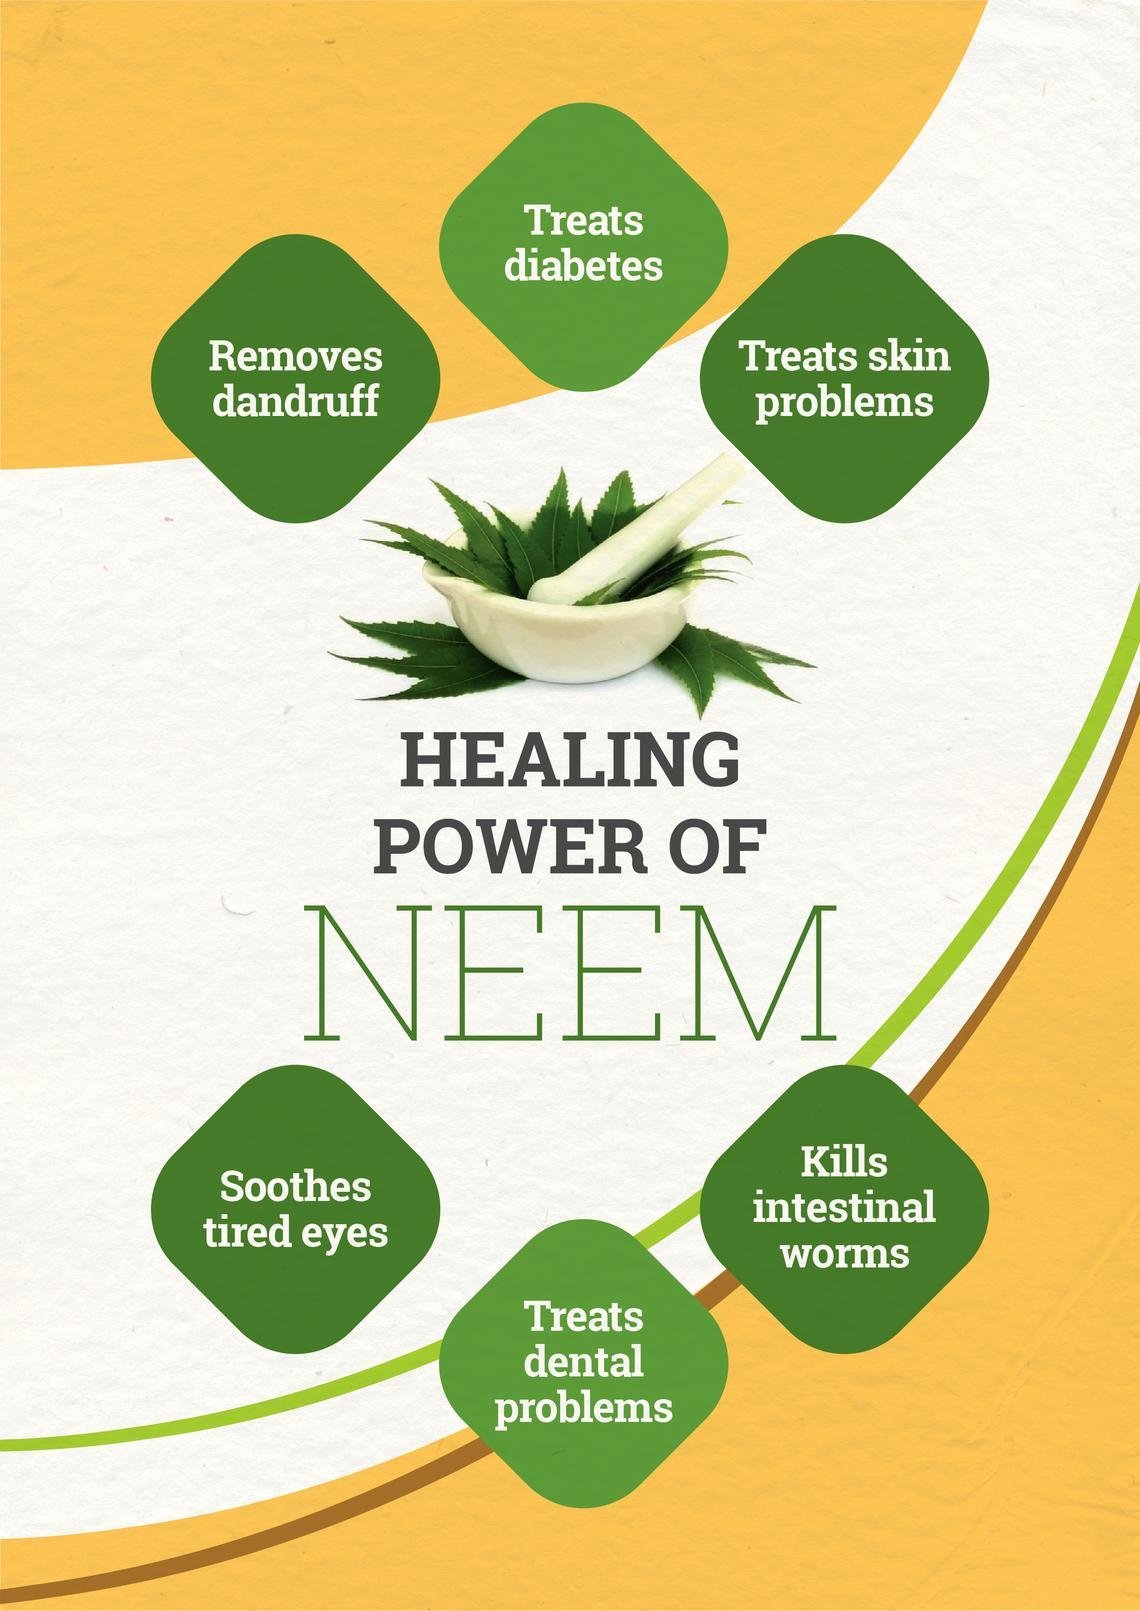 Top 10 Benefits Of Neem Leaves